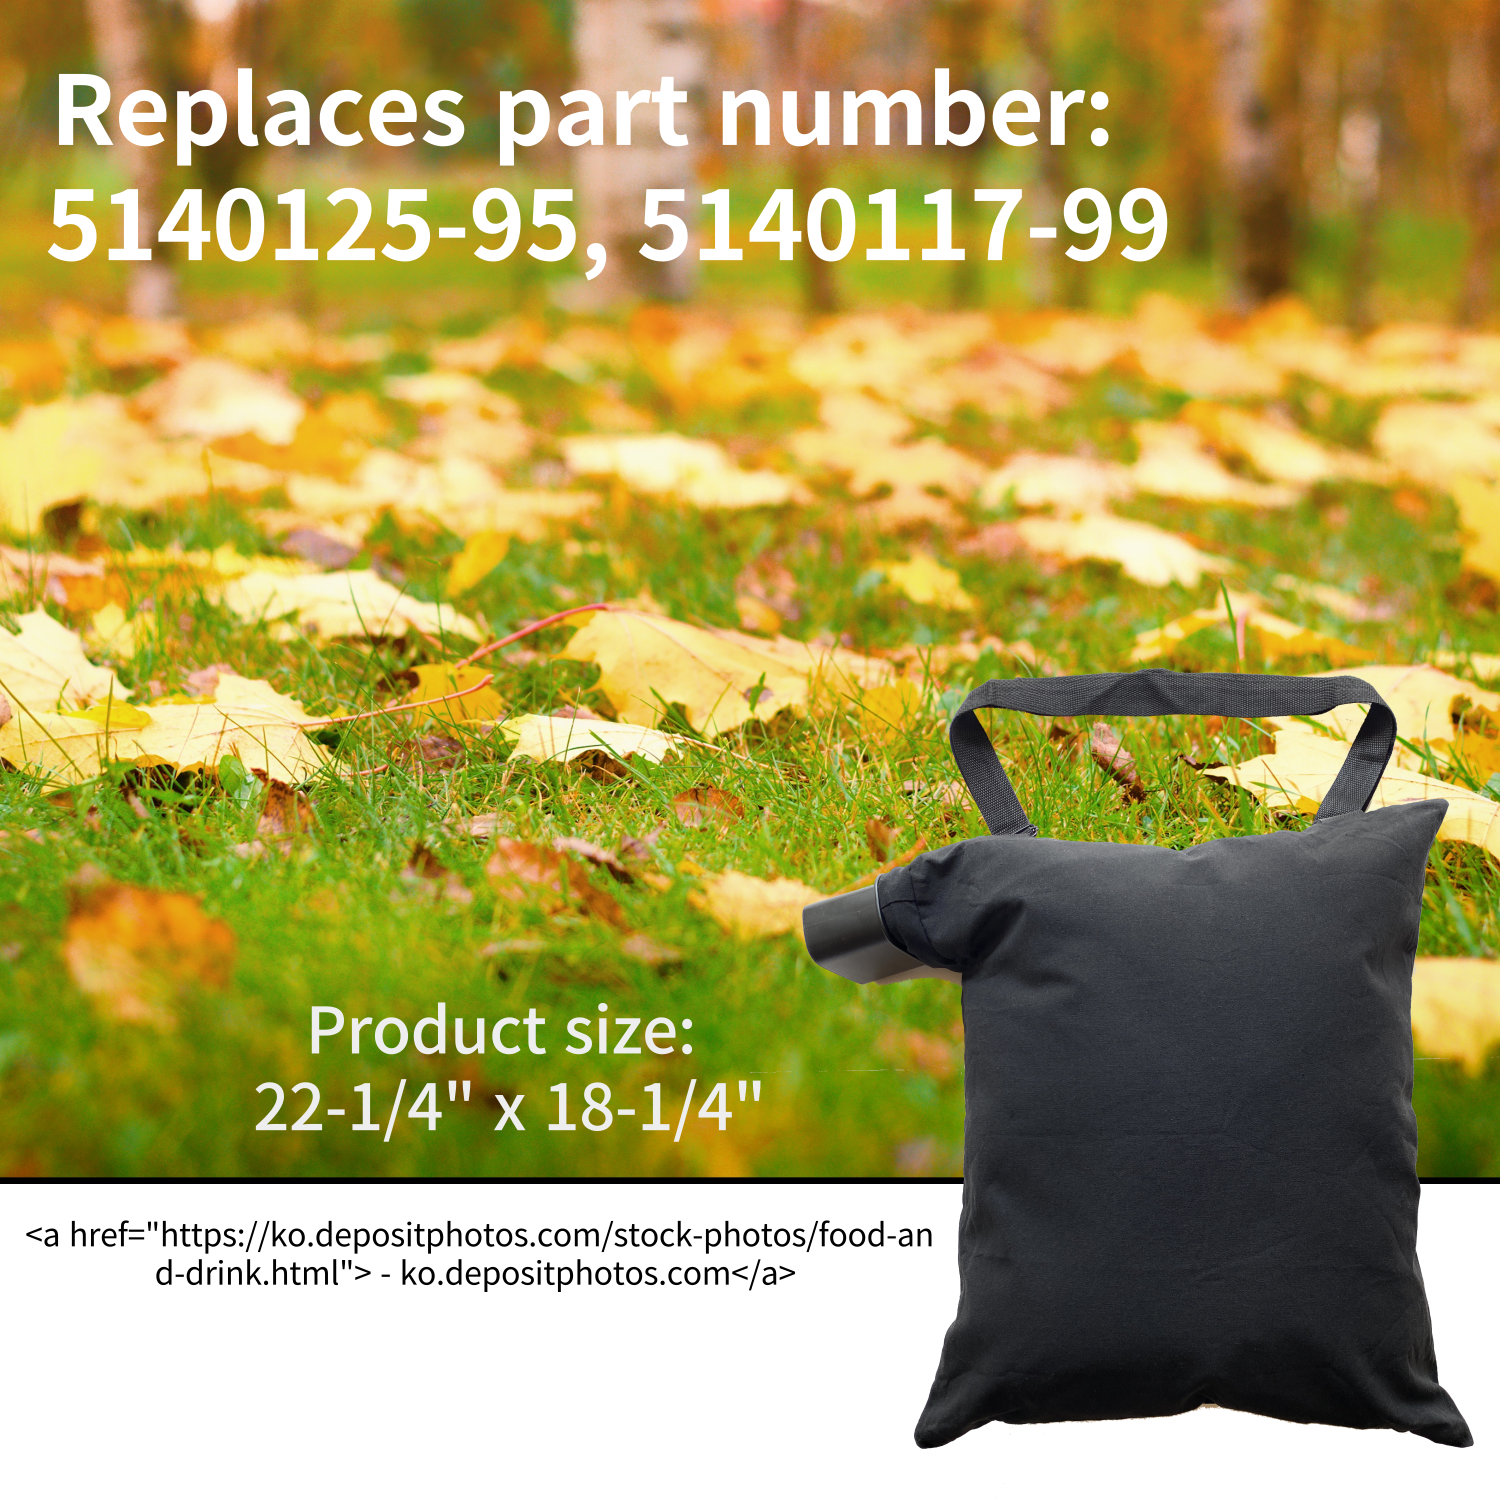 5140125-95 Leaf Blower Vacuum Leaf Bag for Black and Decker BV3100/BV2900  Blower Replaces 5140117-99 - Black